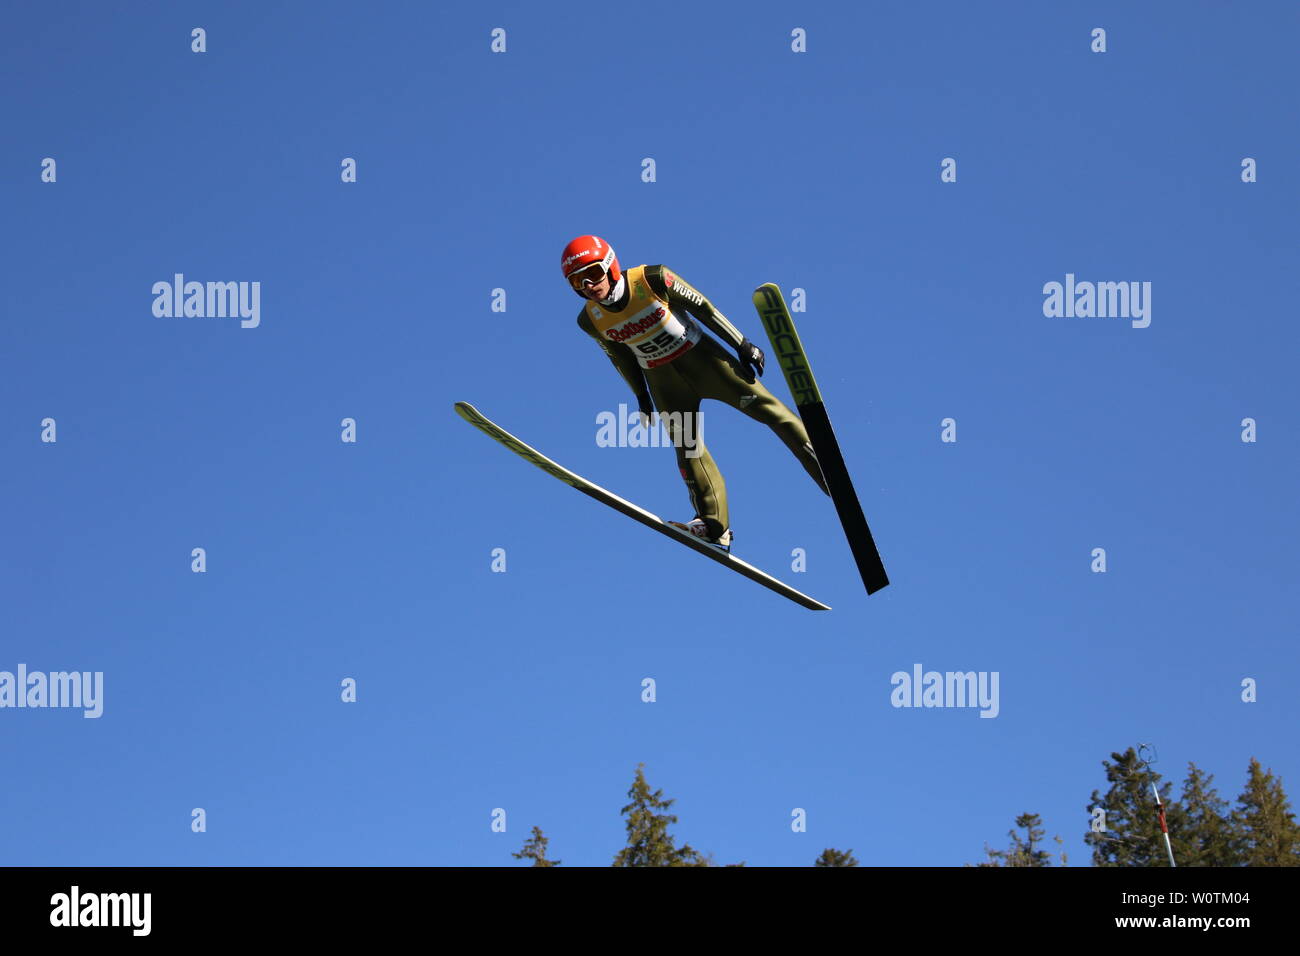 DM Einzel Skisprung Hinterzarten 2018 Foto de stock